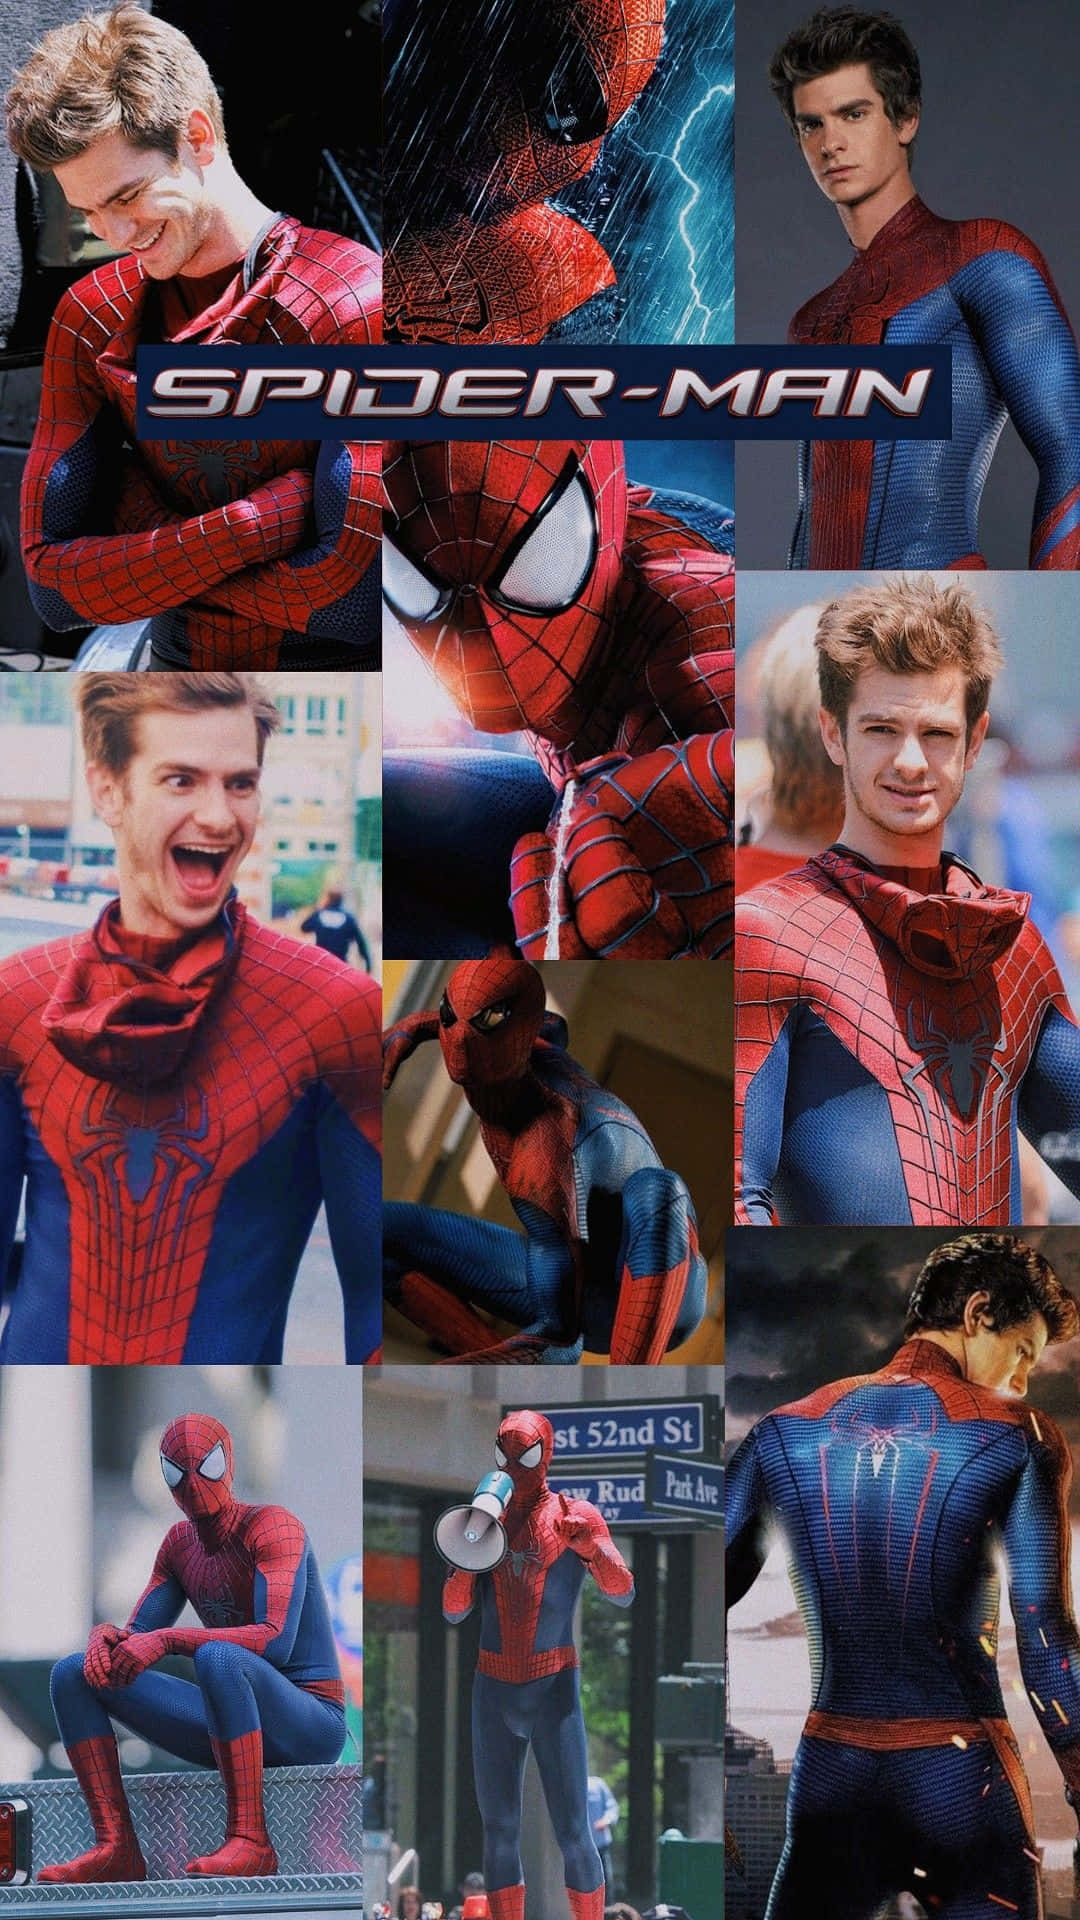 Andrew Garfield as Peter Parker in "Spider Man" Wallpaper